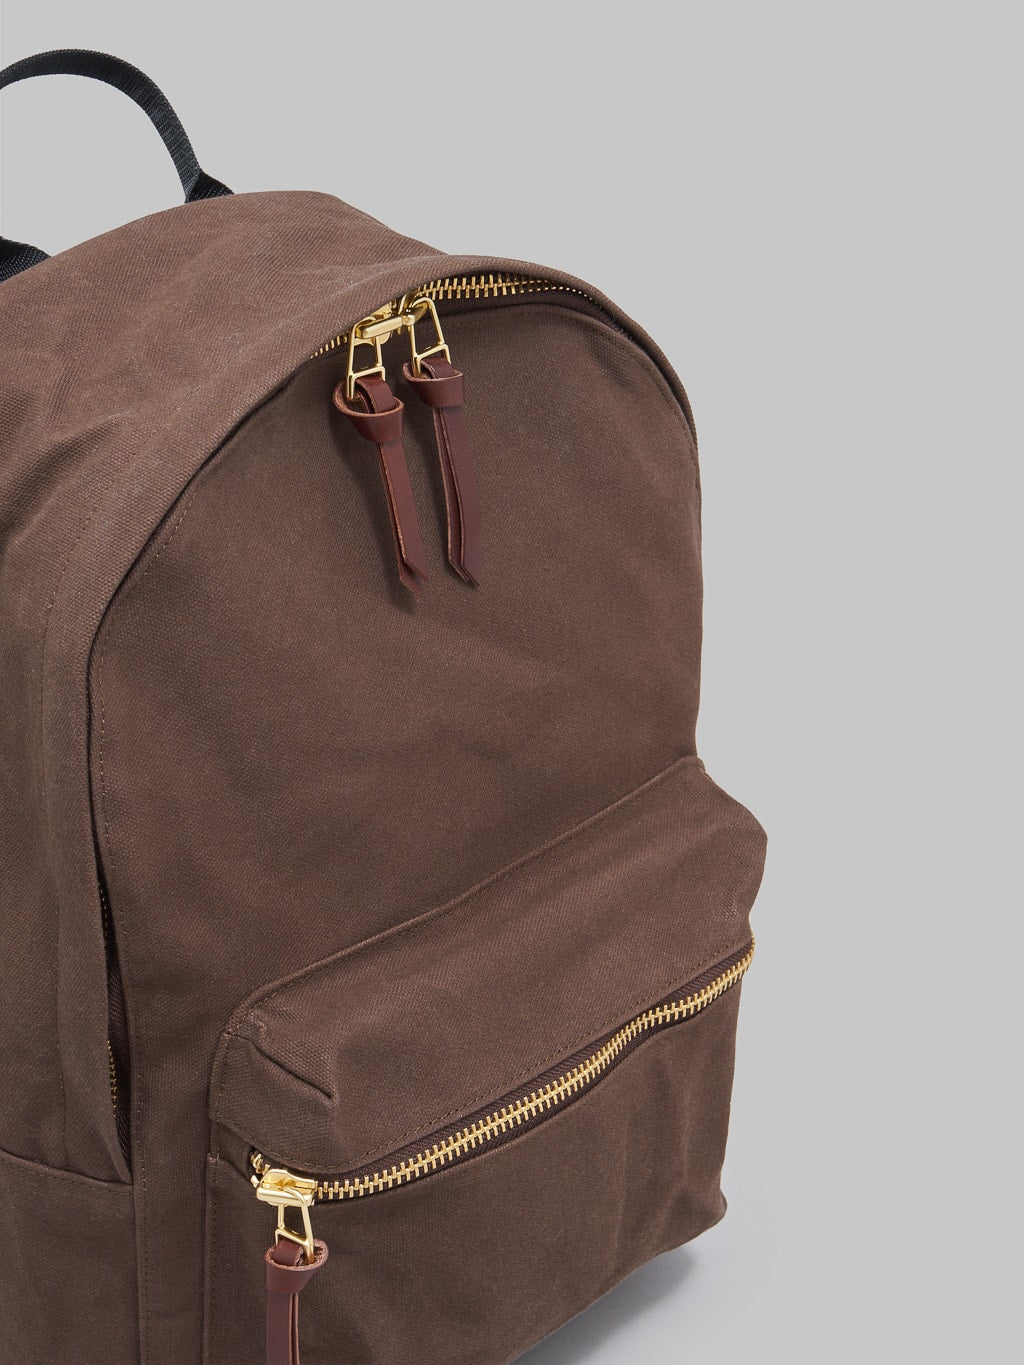 Kobashi Studio Standard Backpack Brown zippers